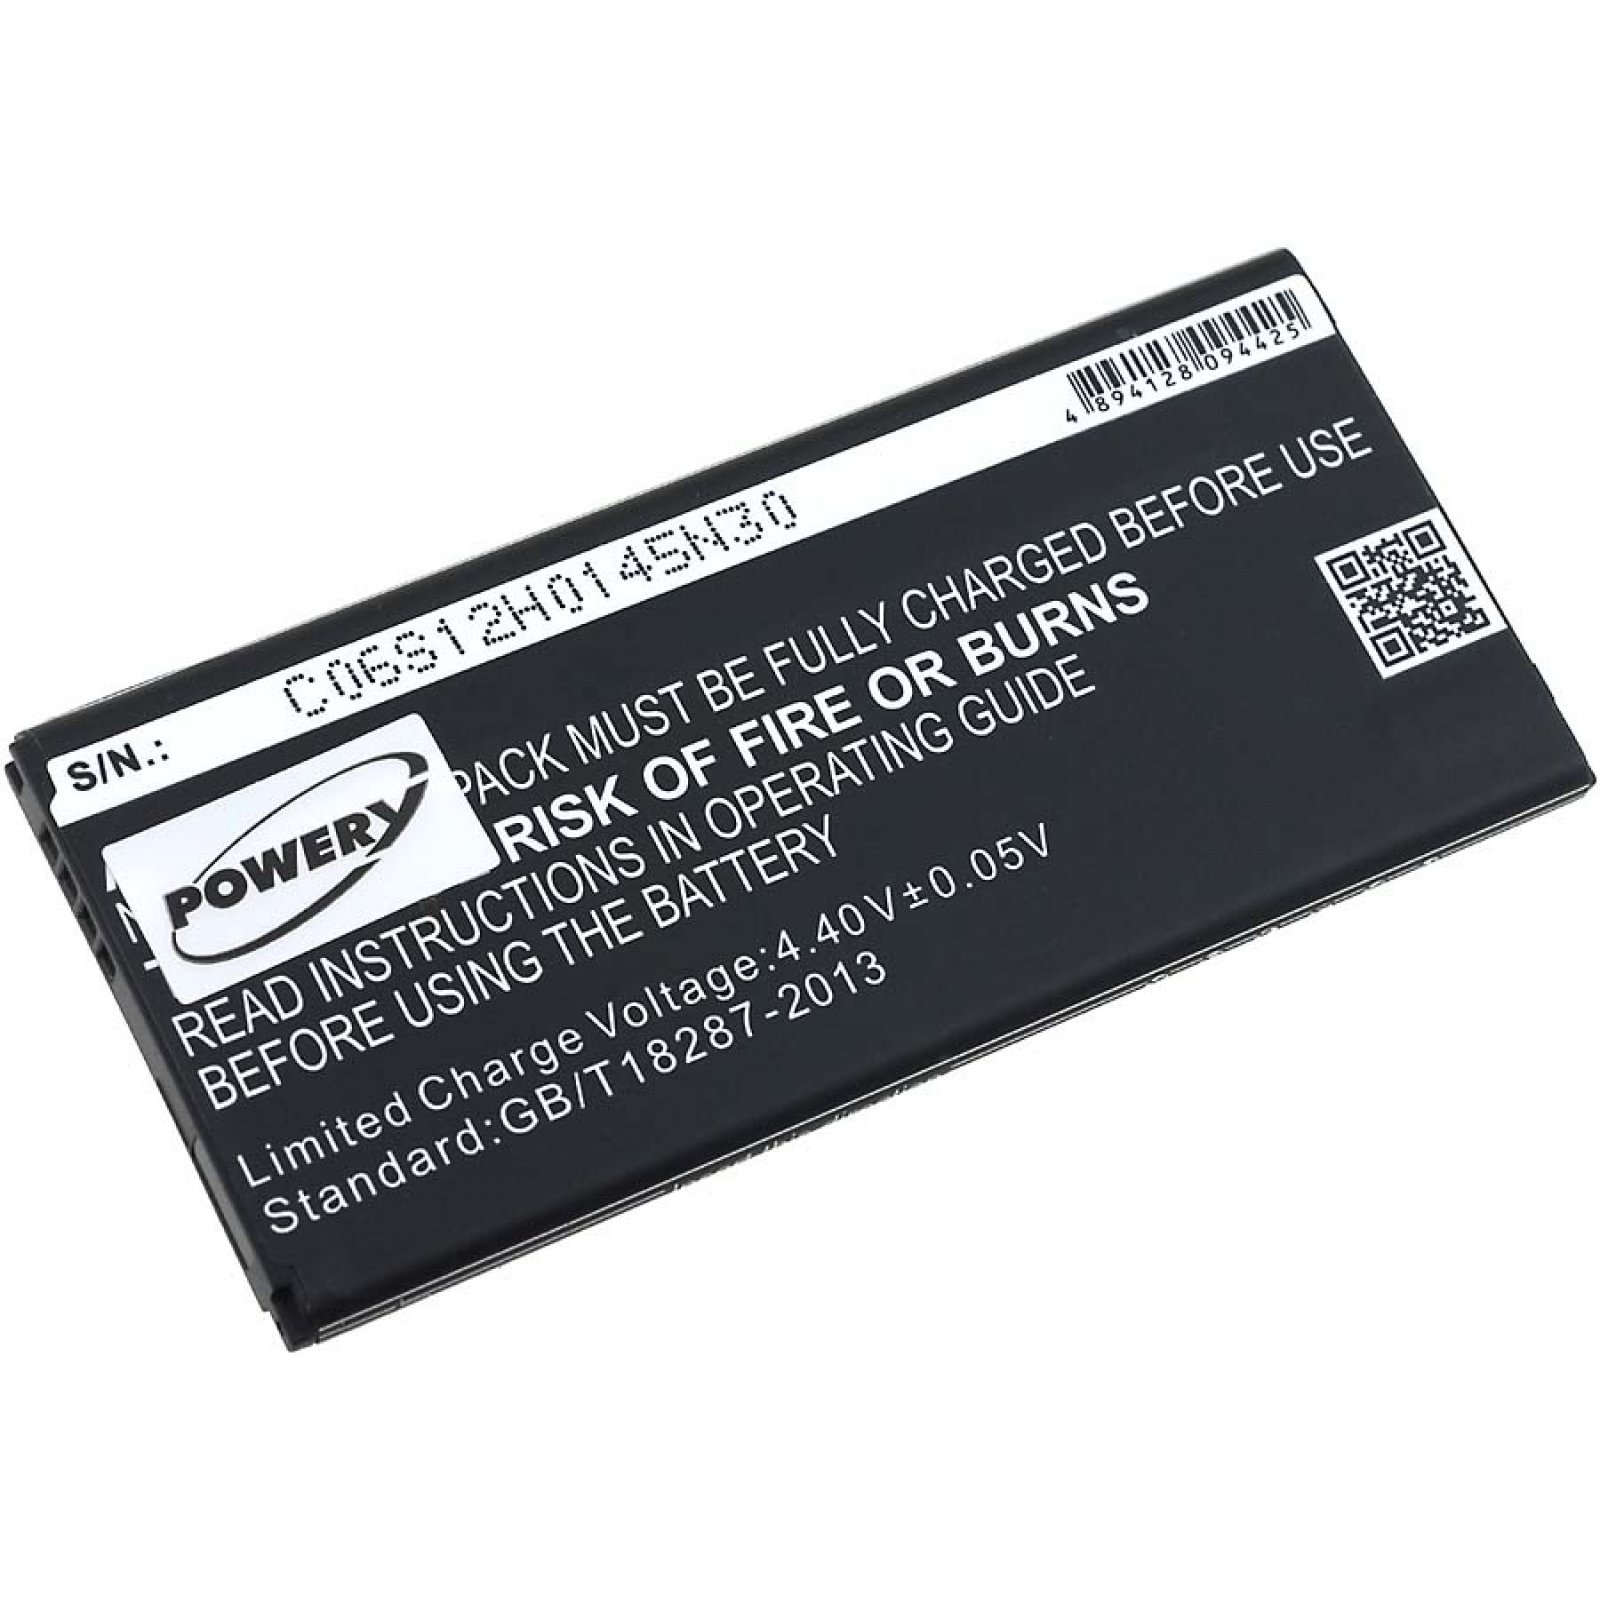 3.85 Samsung Akku Volt, 1860mAh SM-G850F Li-Ion Akku, für POWERY